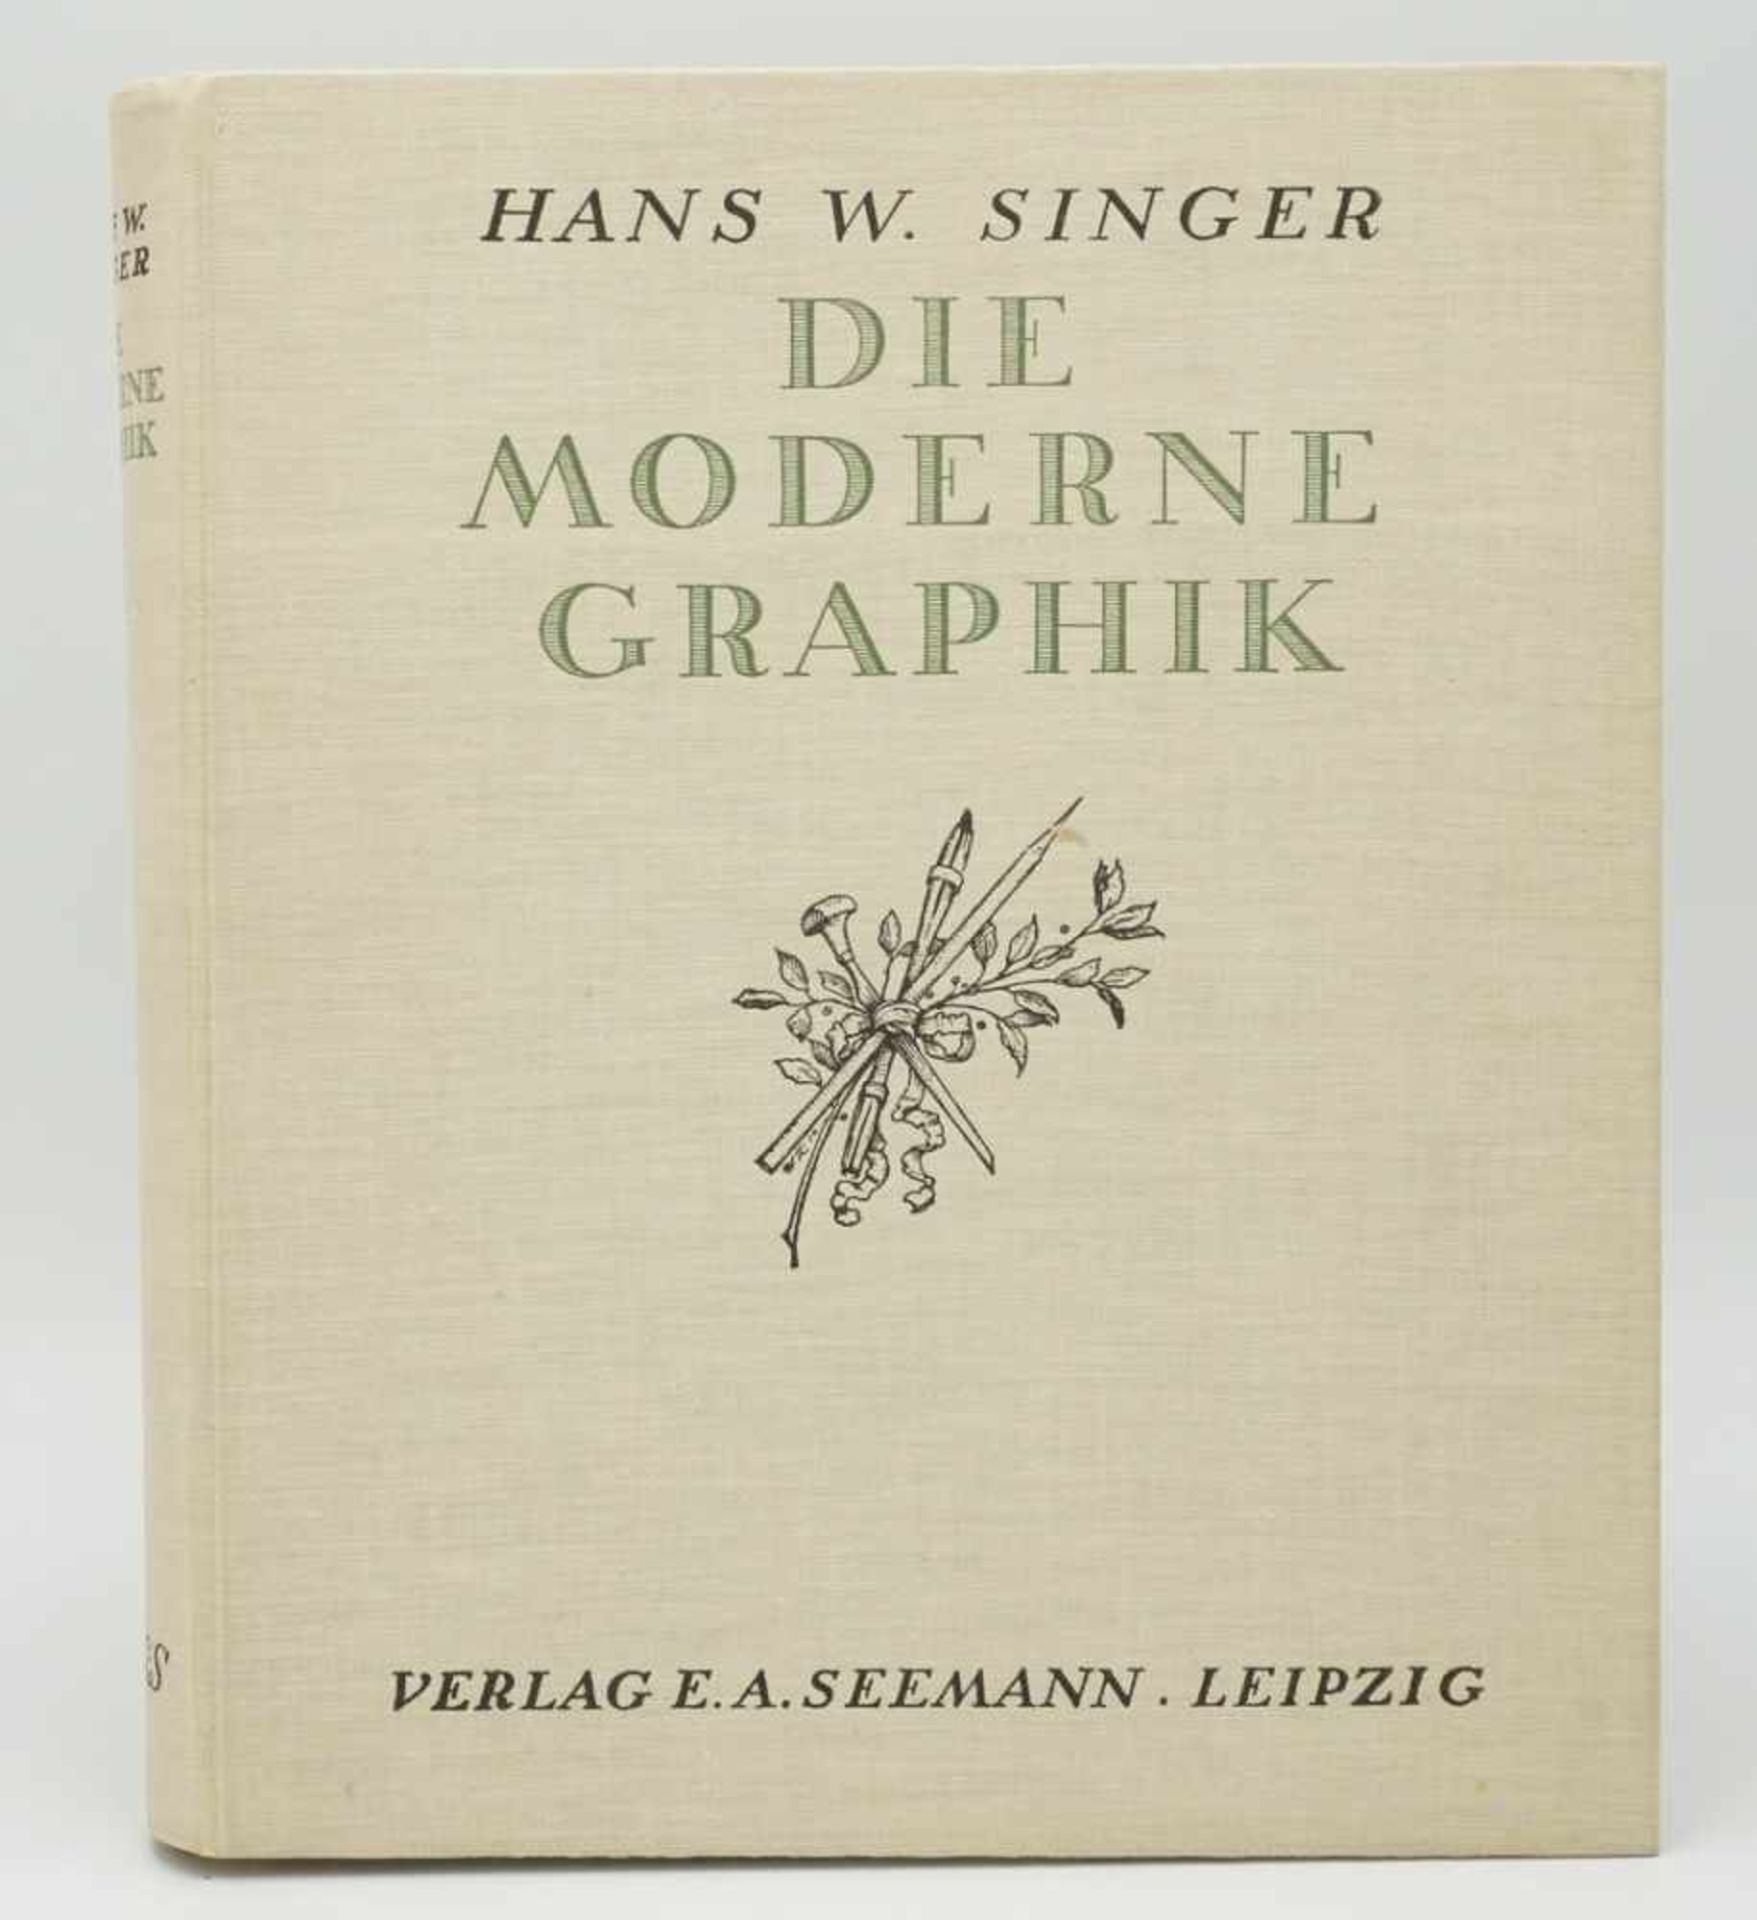 Hans W. Singer, "Die Moderne Graphik"